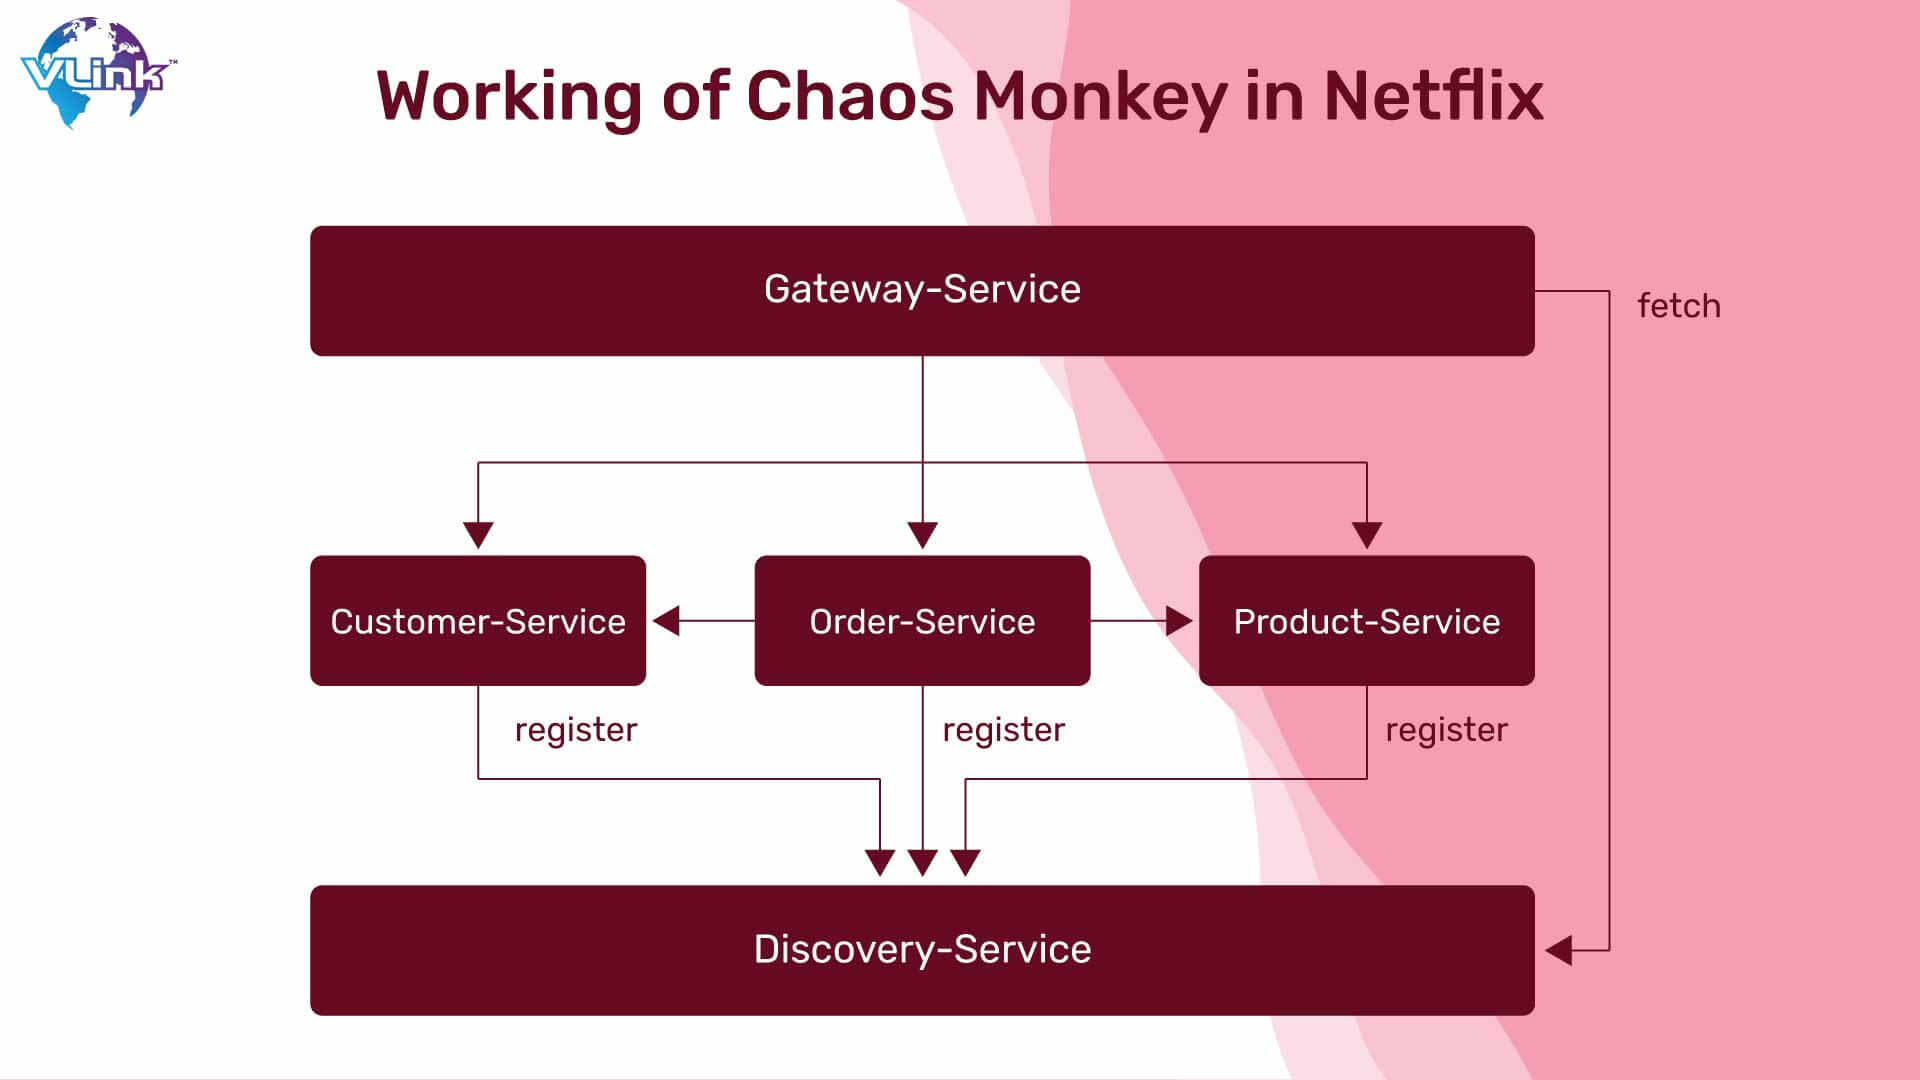 Working of Chaos Monkey in Netflix